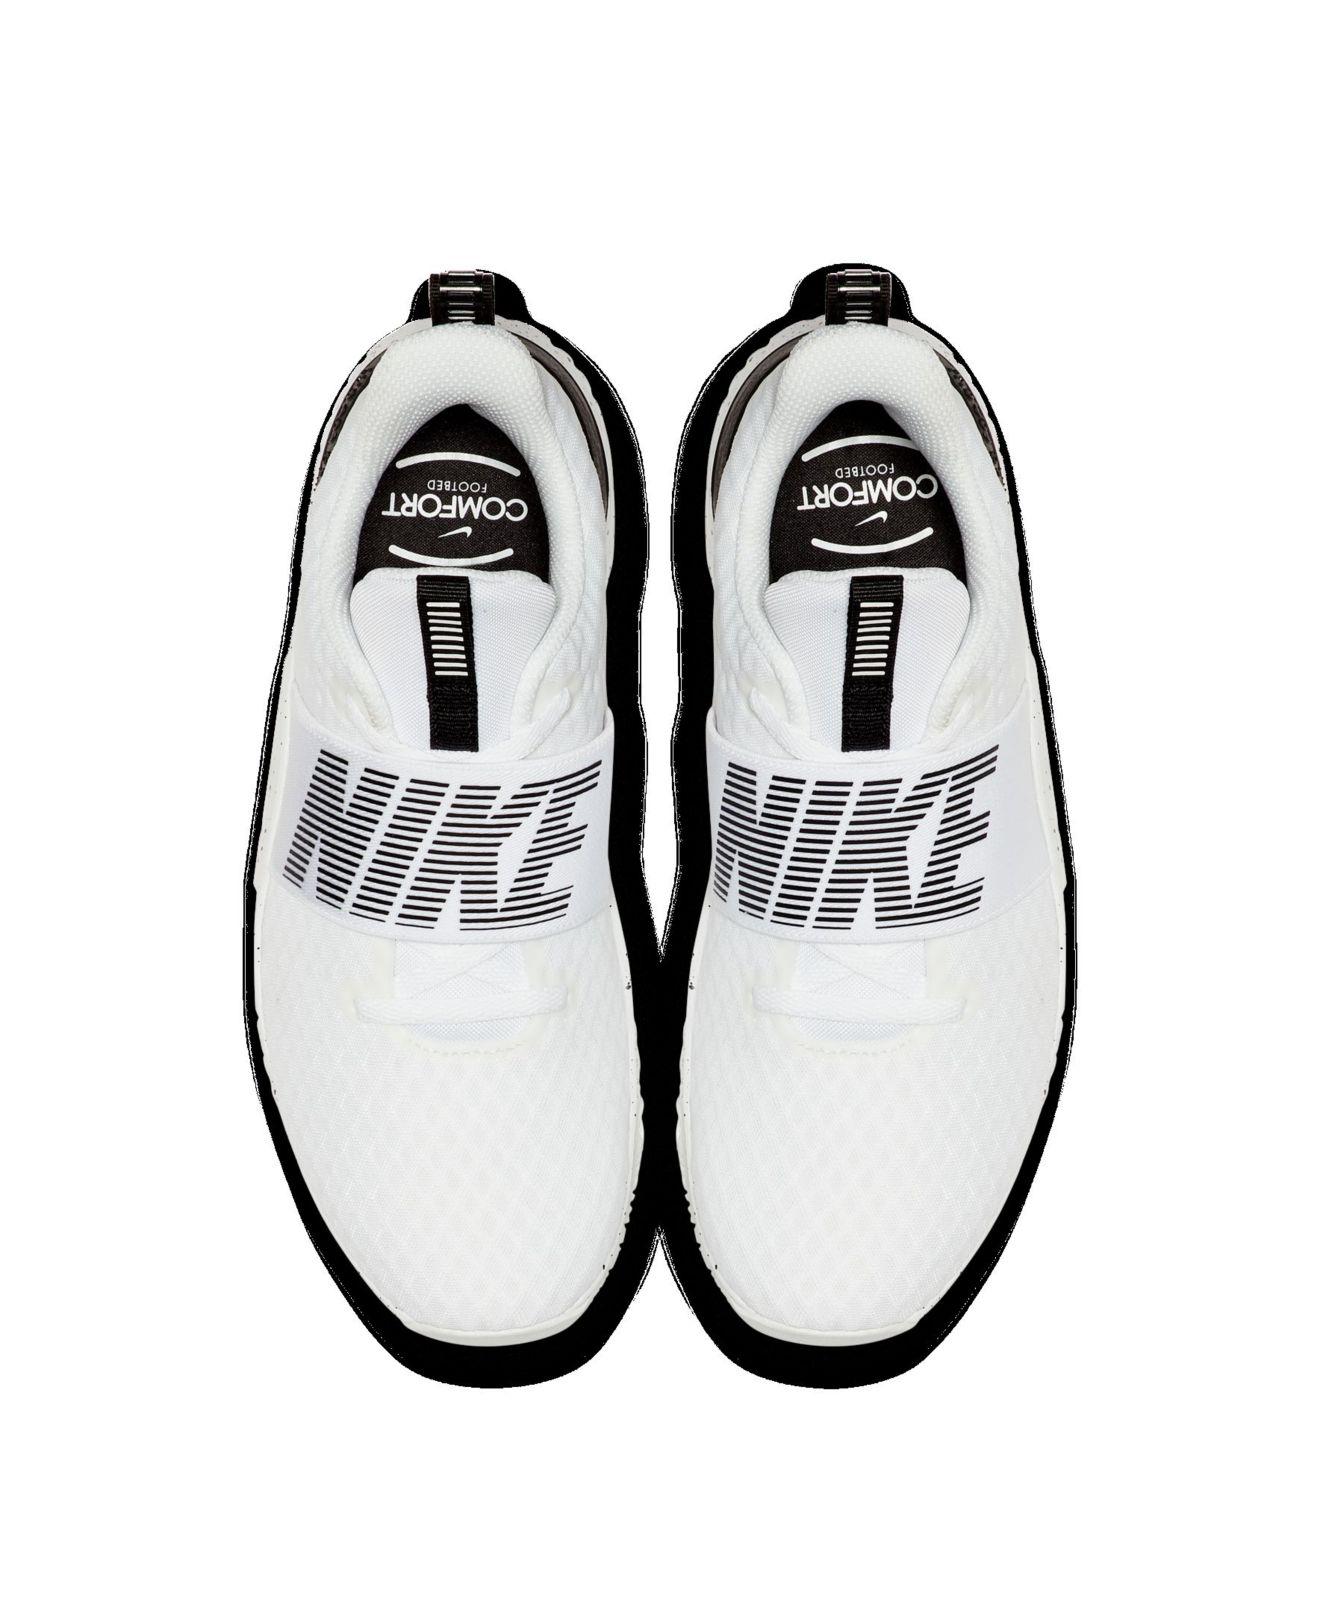 Nike In-season Tr 9 Training Shoe (white) - Lyst